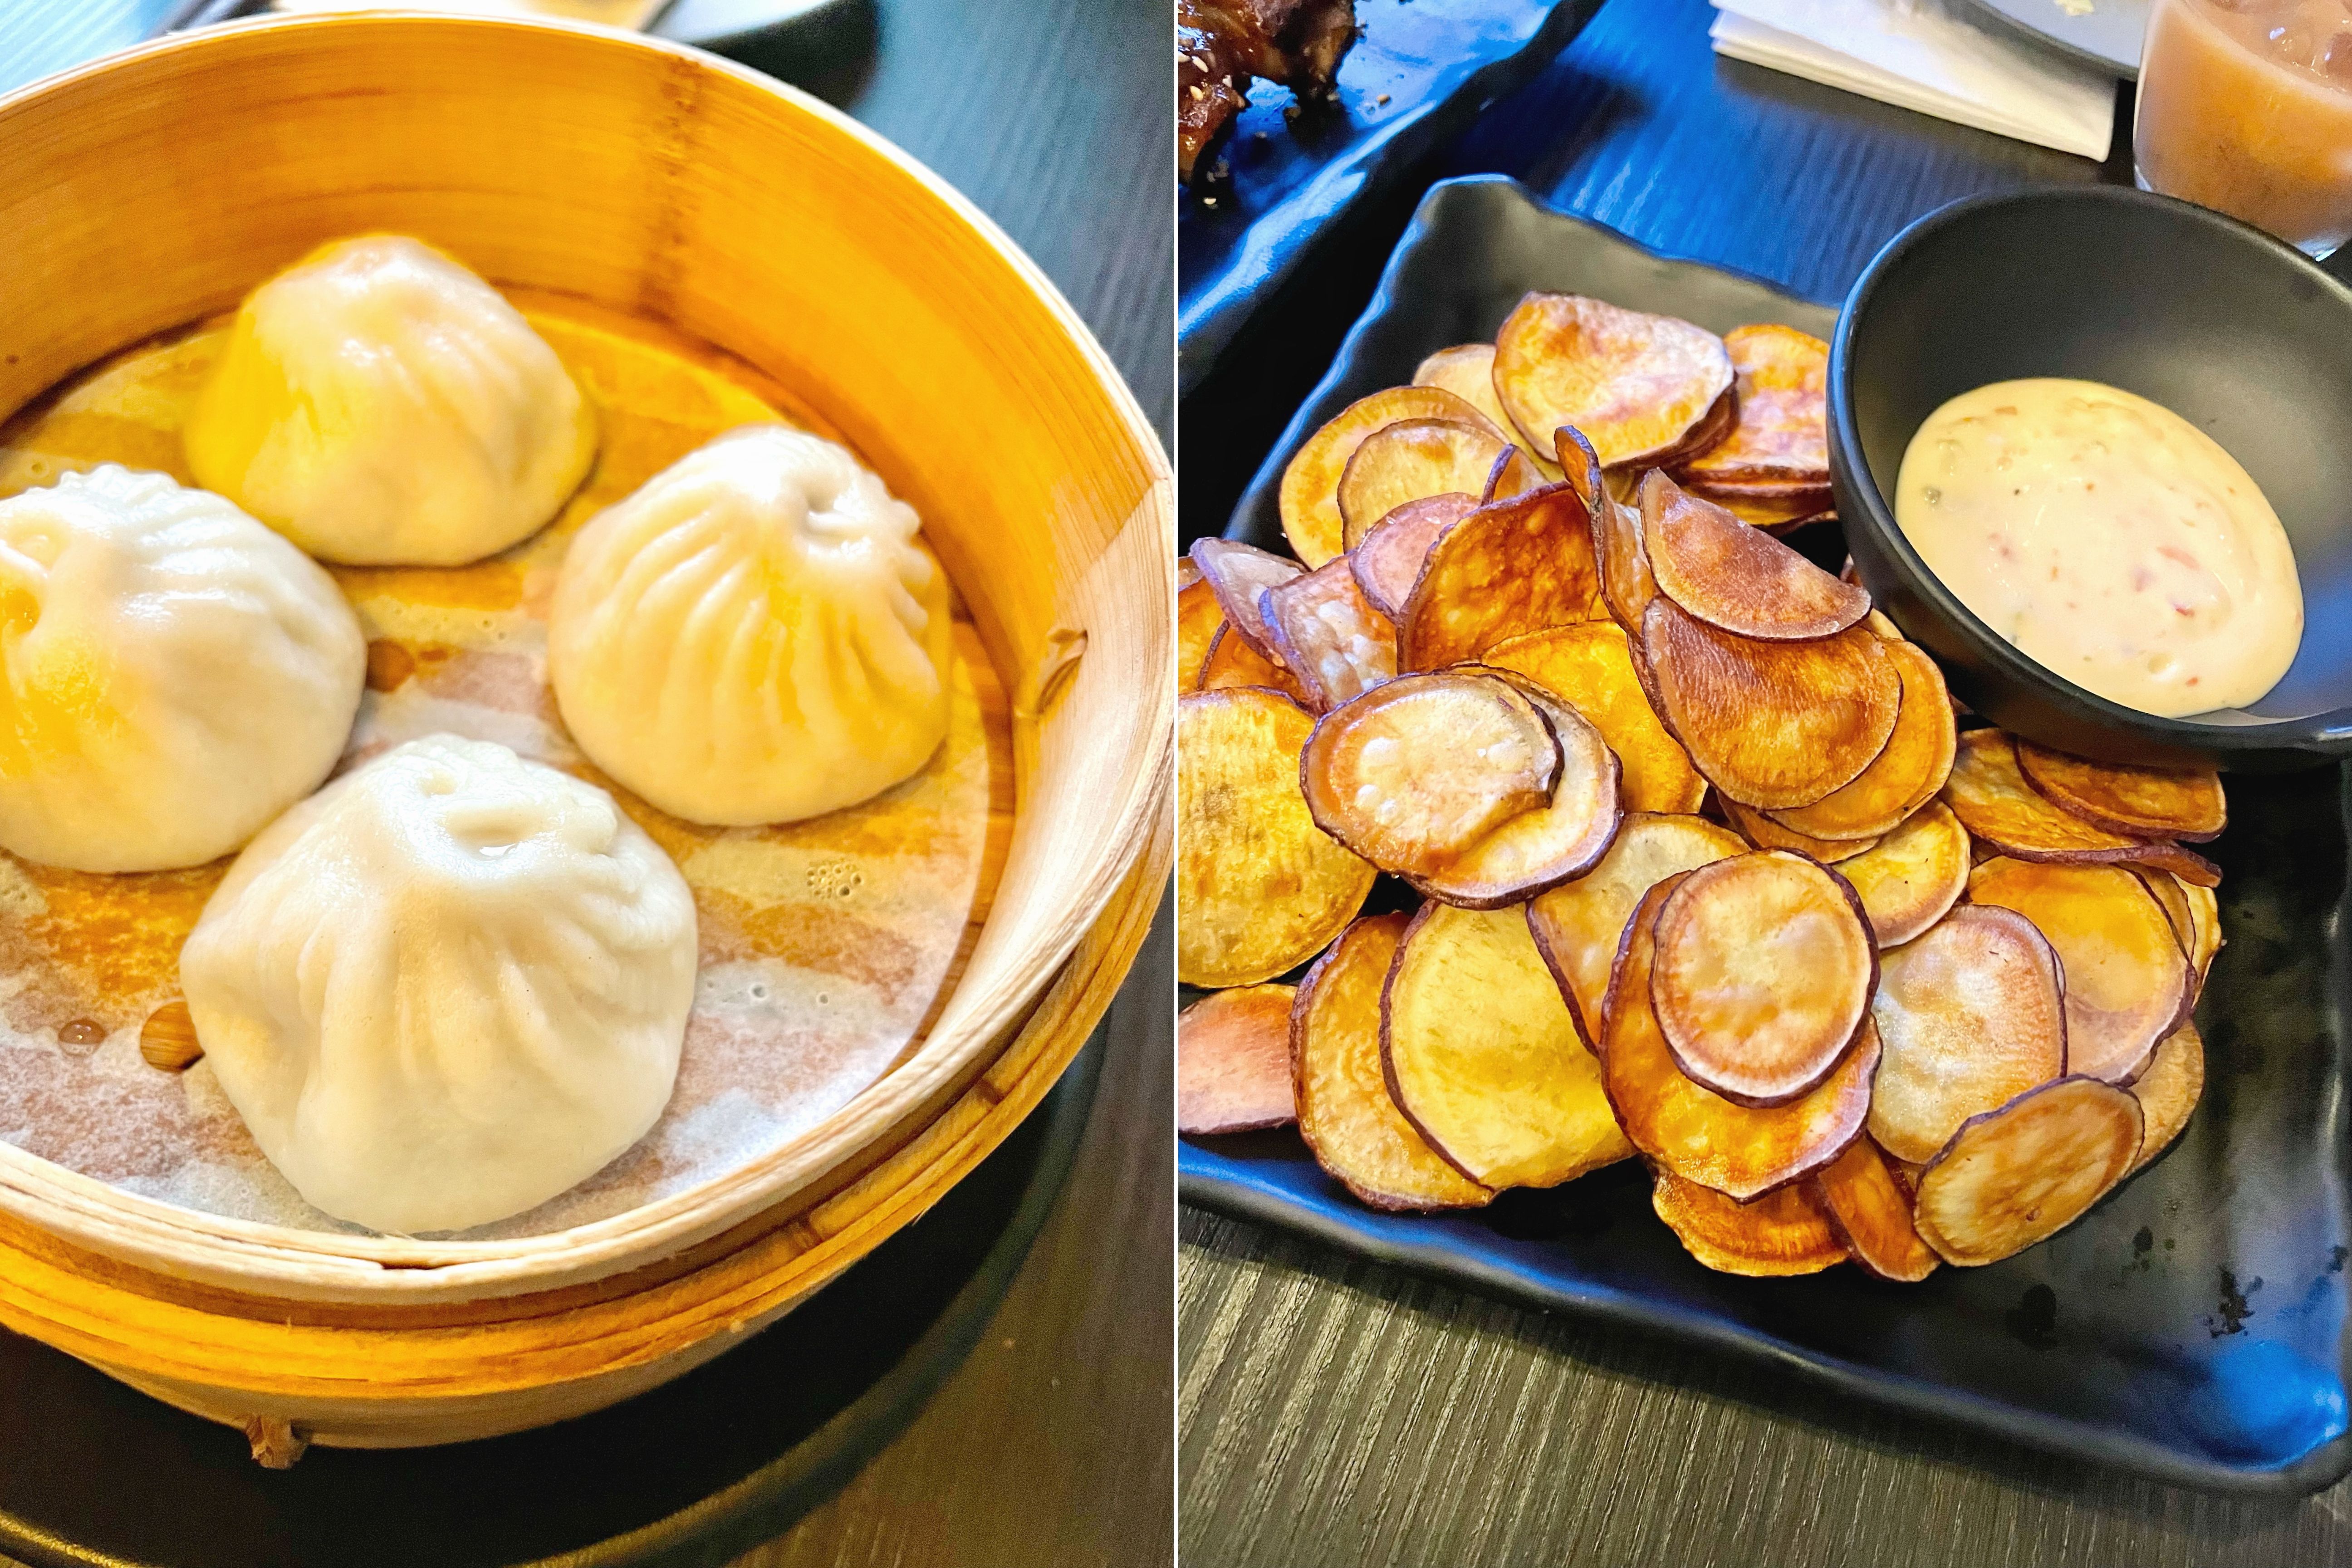 Shanghai soup dumplings with Japanese sweet potato chips.